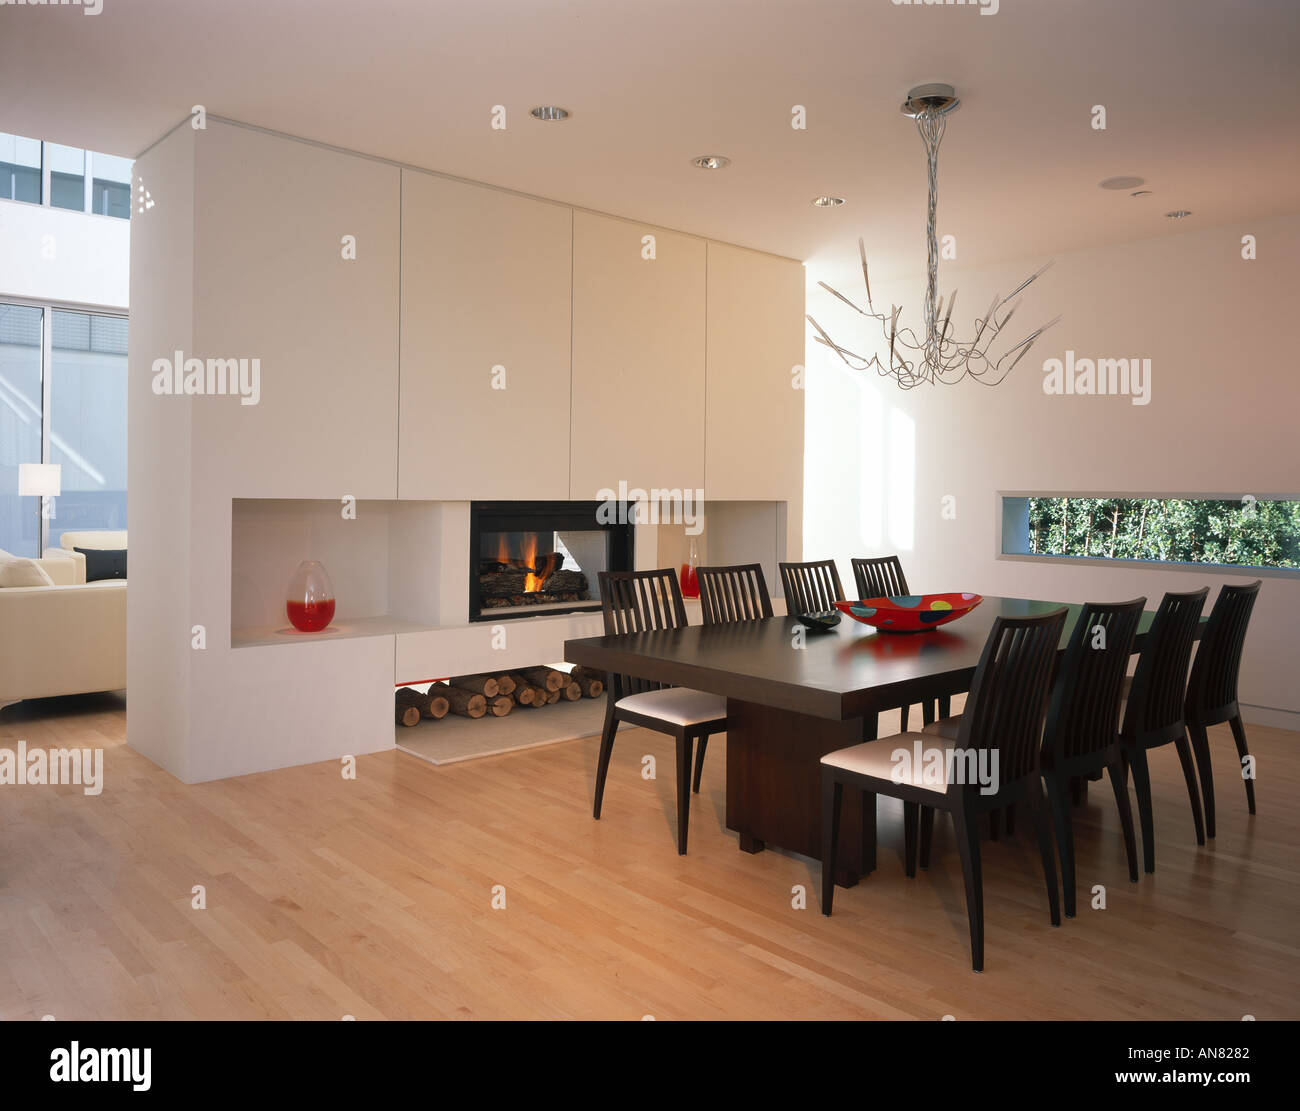 Oshry Residence, Bel Air, California. Dining area. Architect: SPF Architects Stock Photo